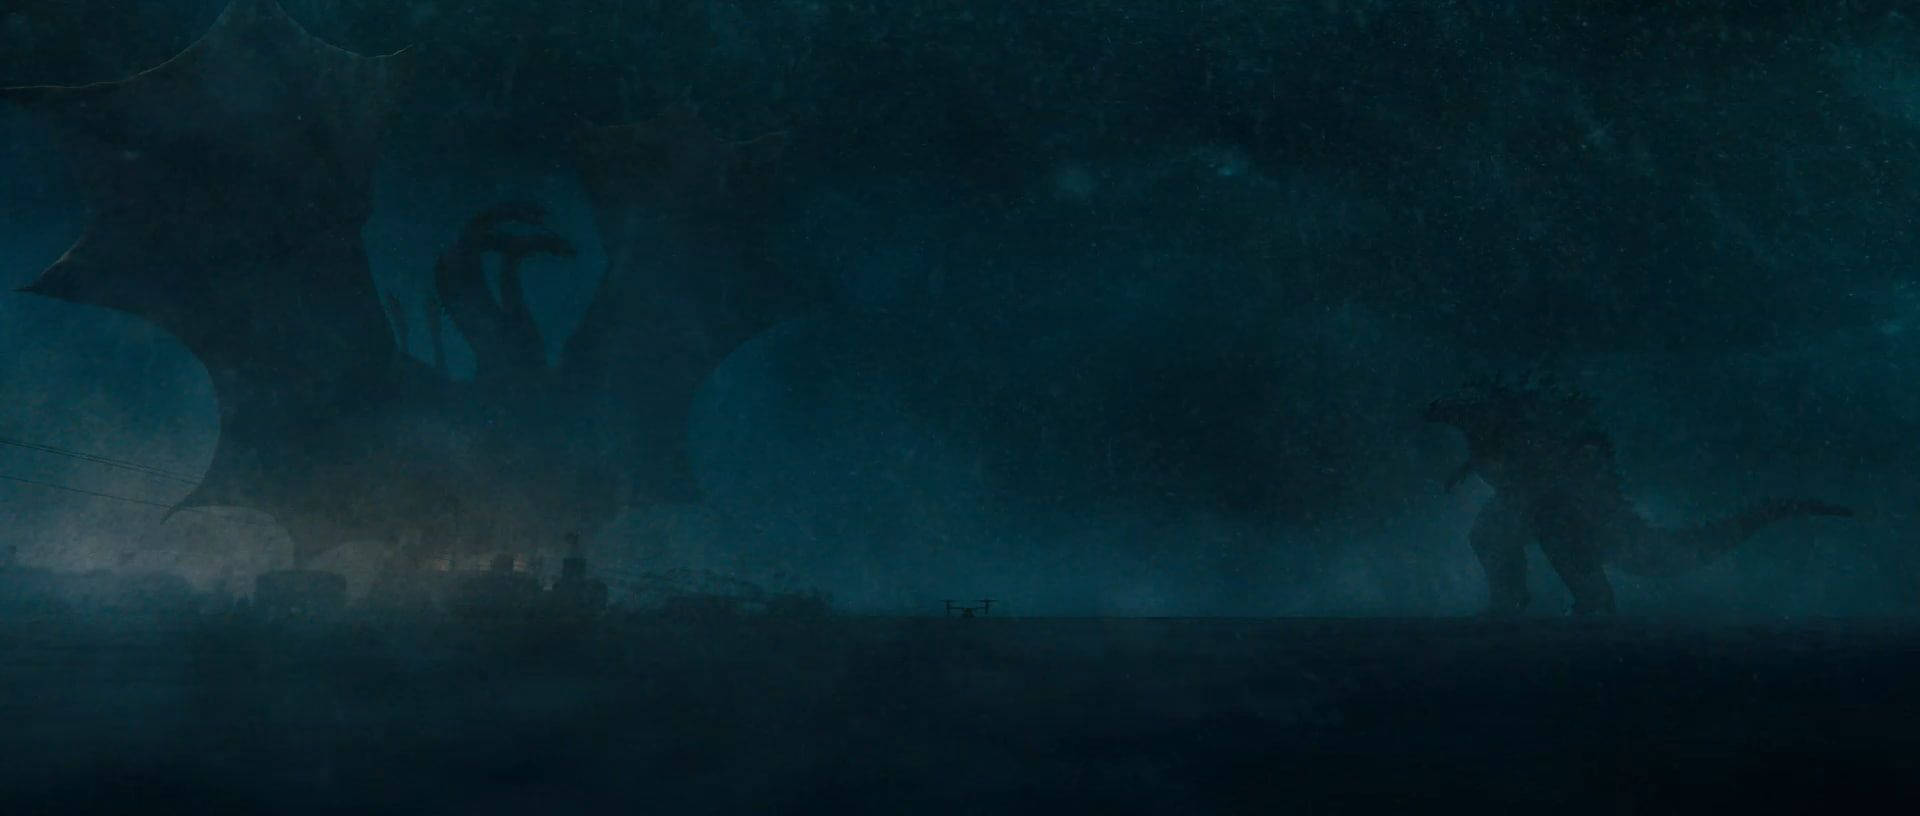 Aesthetic Battle Godzilla King Of The Monsters Art Background